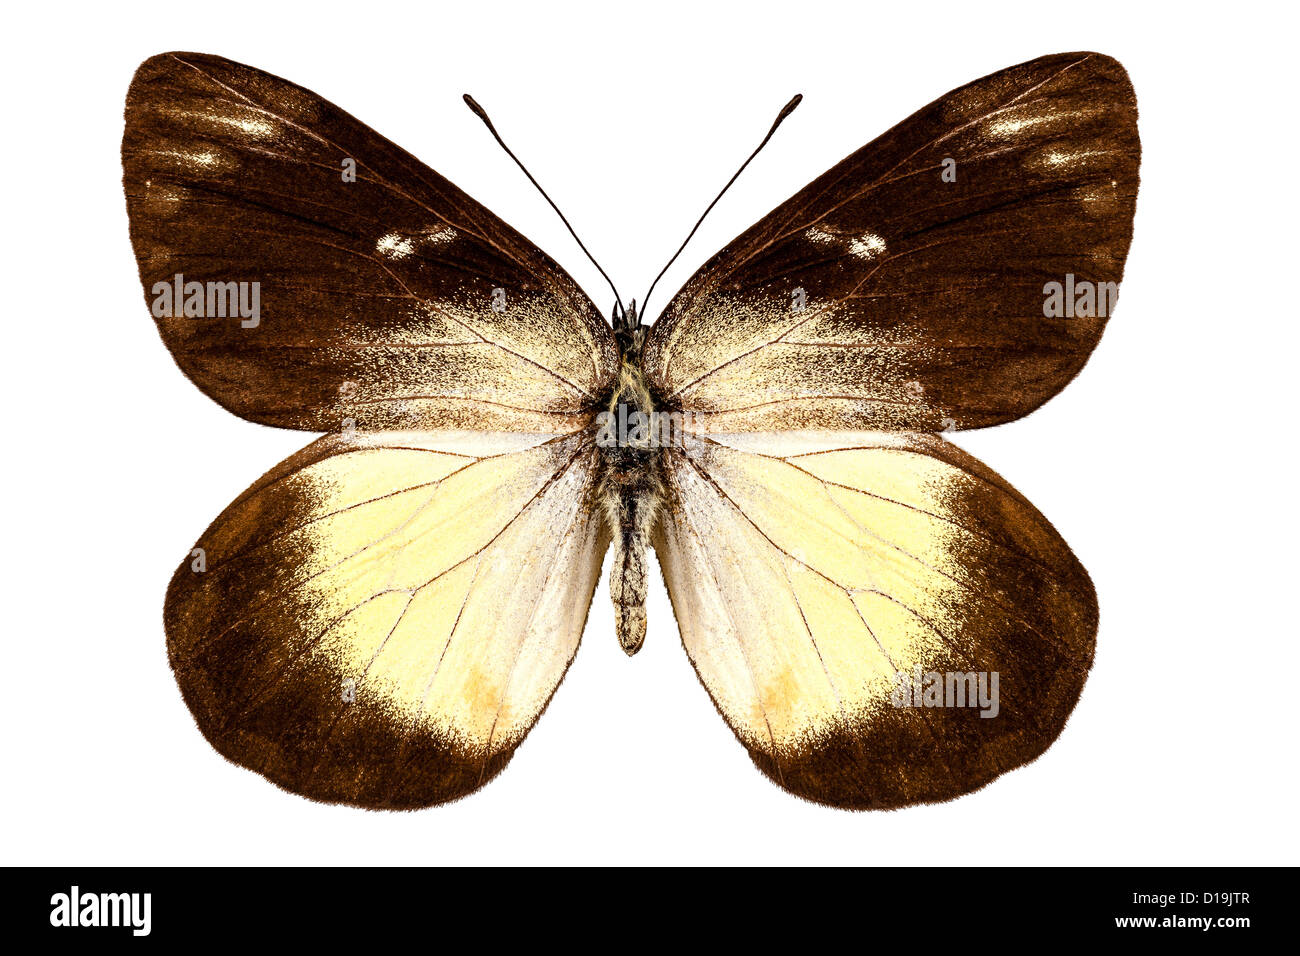 Butterfly species Delias fascelis korupun Stock Photo